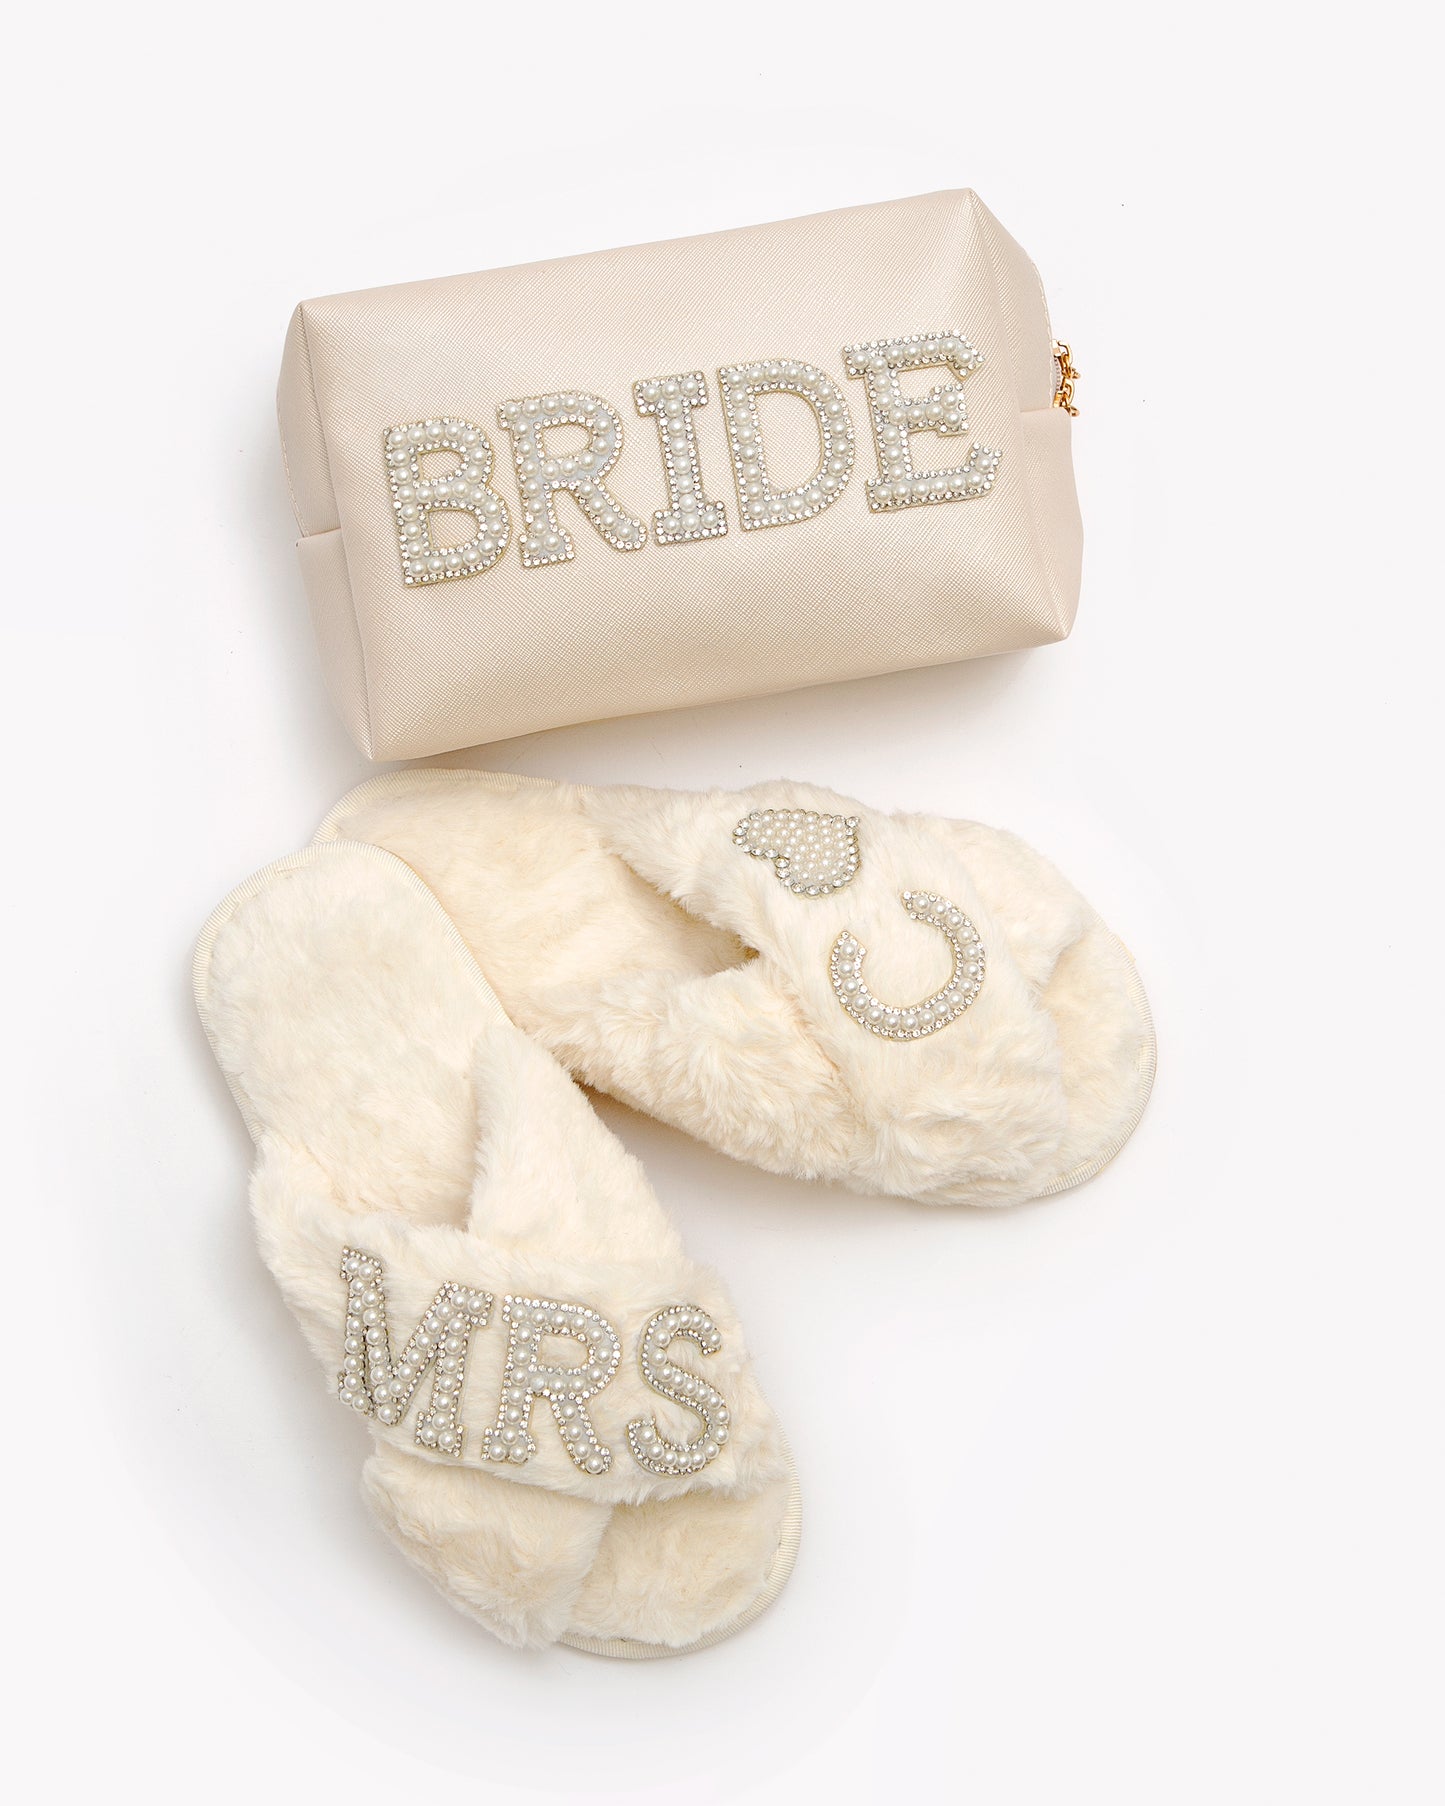 Bridal Gift Set Mrs+Your Initial Slippers & "Bride" Make Up Bag